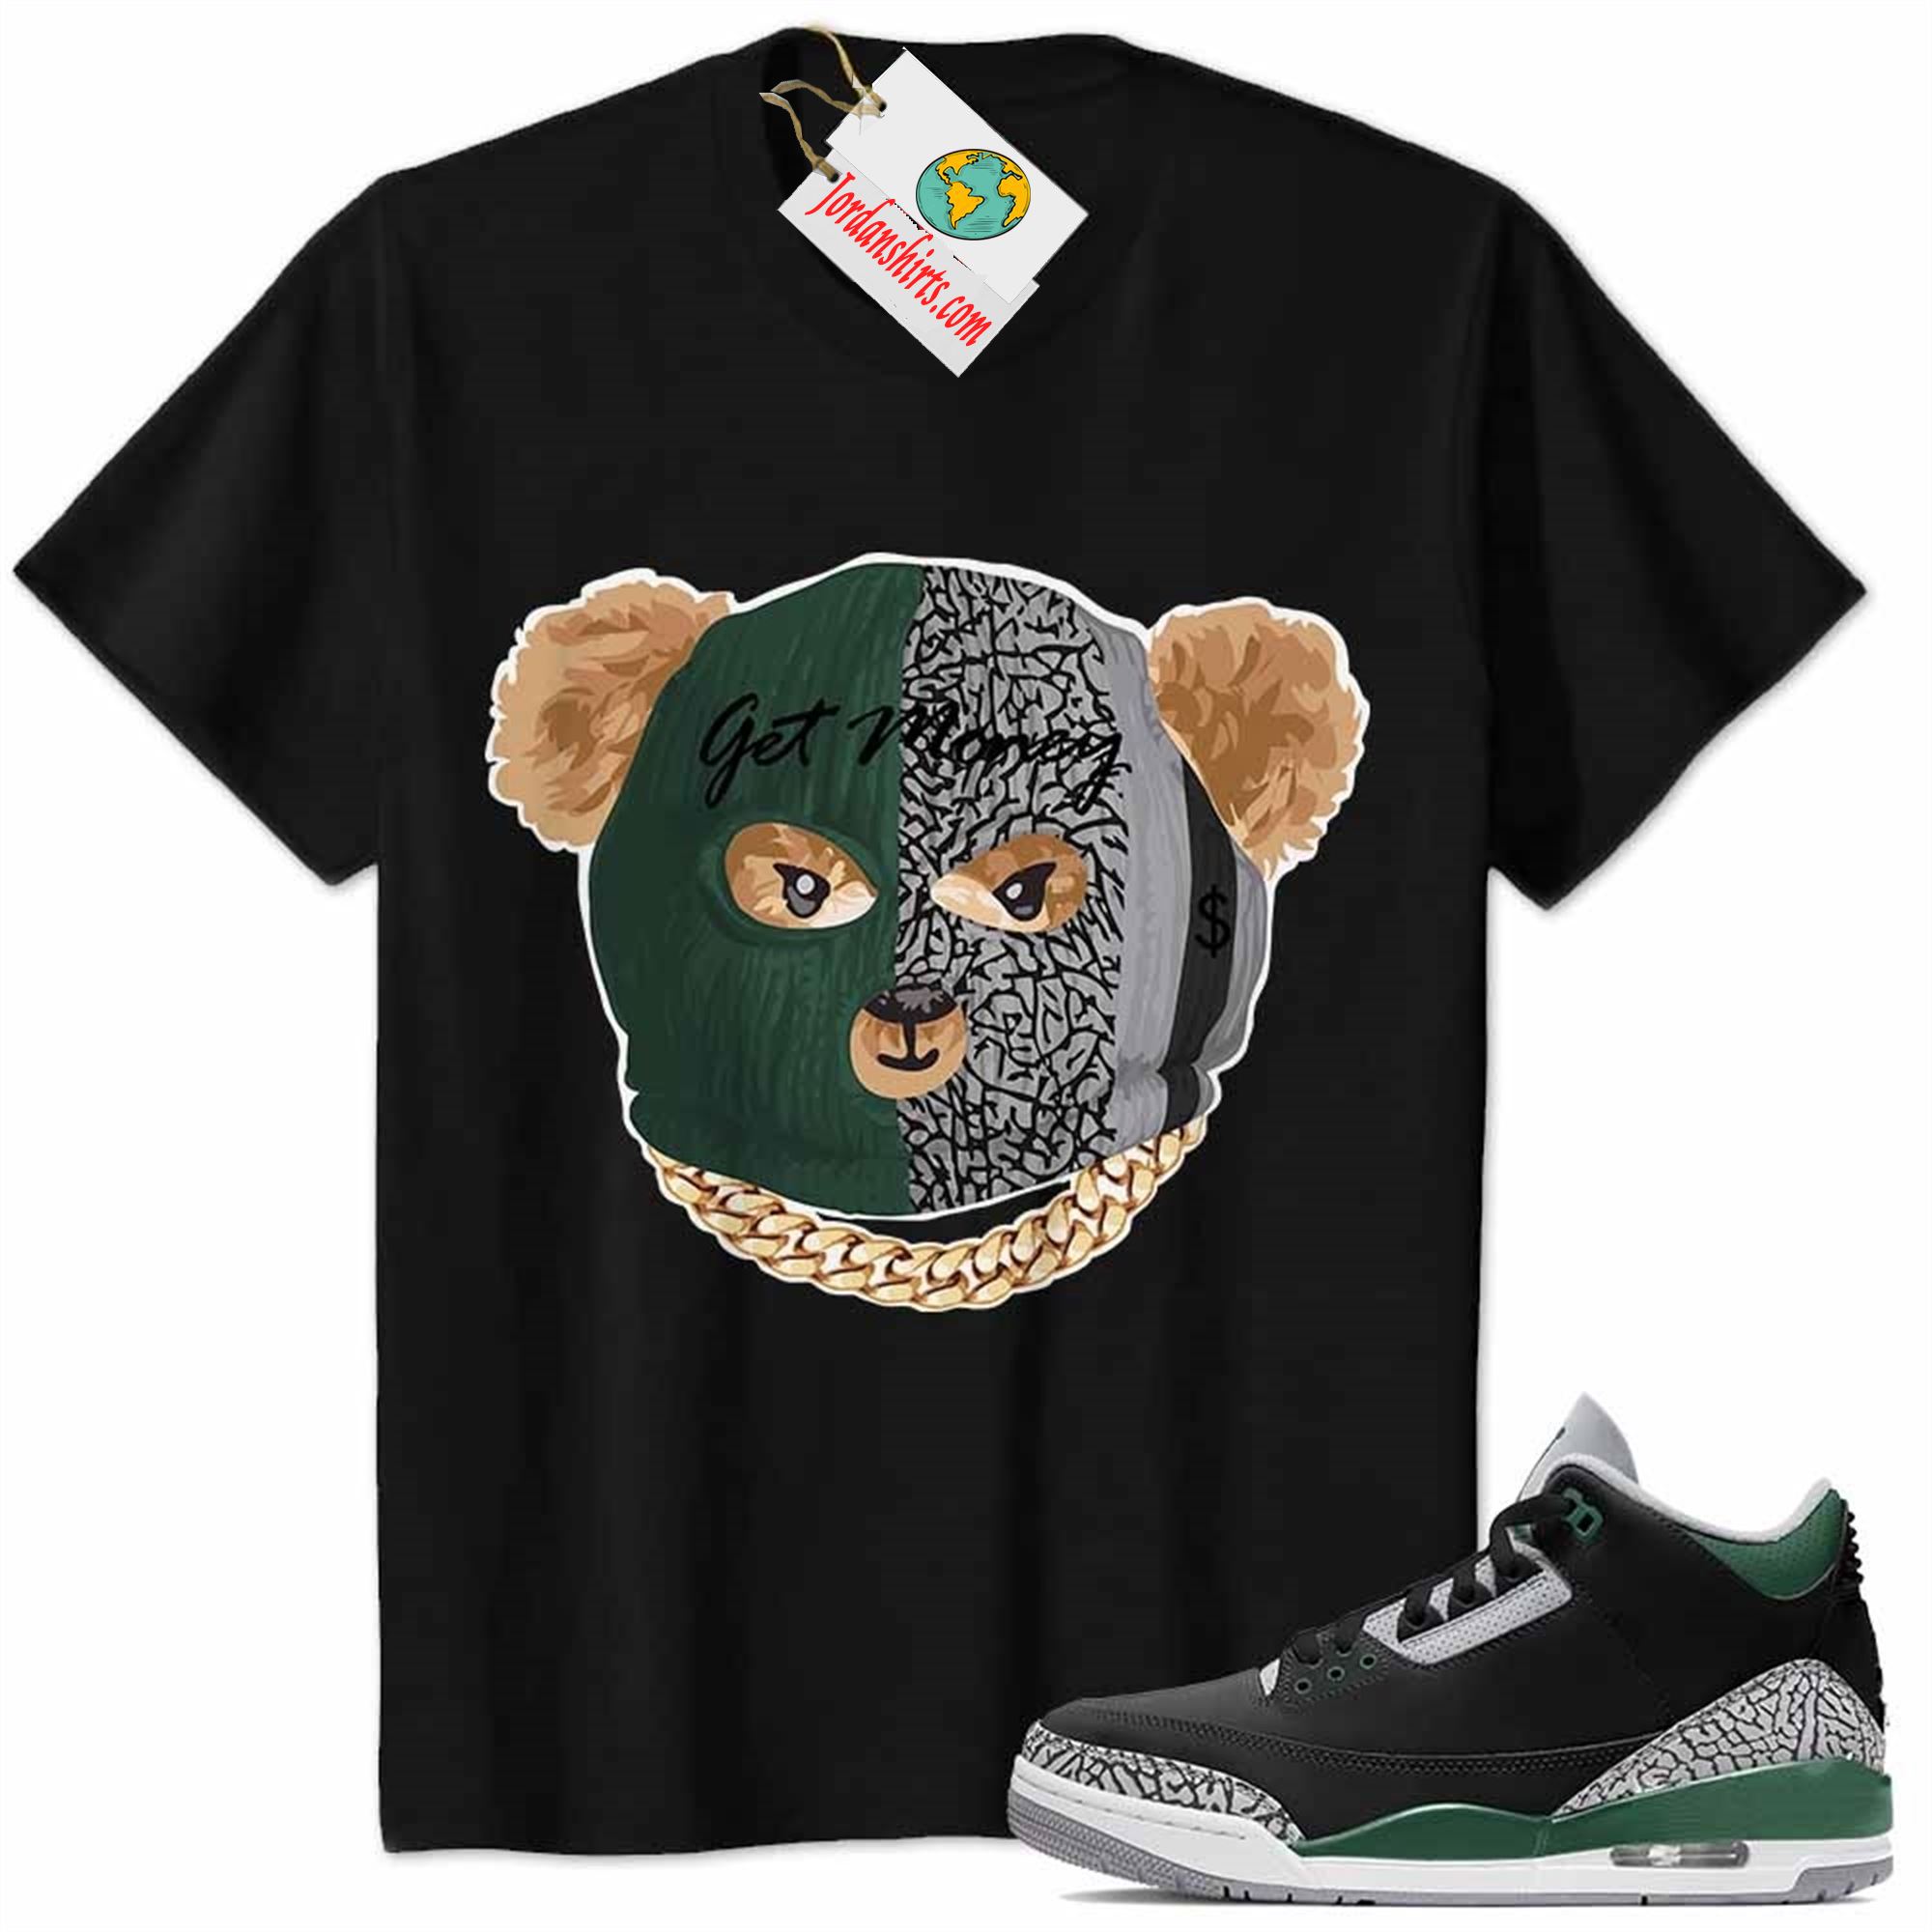 Jordan 3 Shirt, Robber Teddy Get Money Ski Mask Black Air Jordan 3 Pine Green 3s Size Up To 5xl